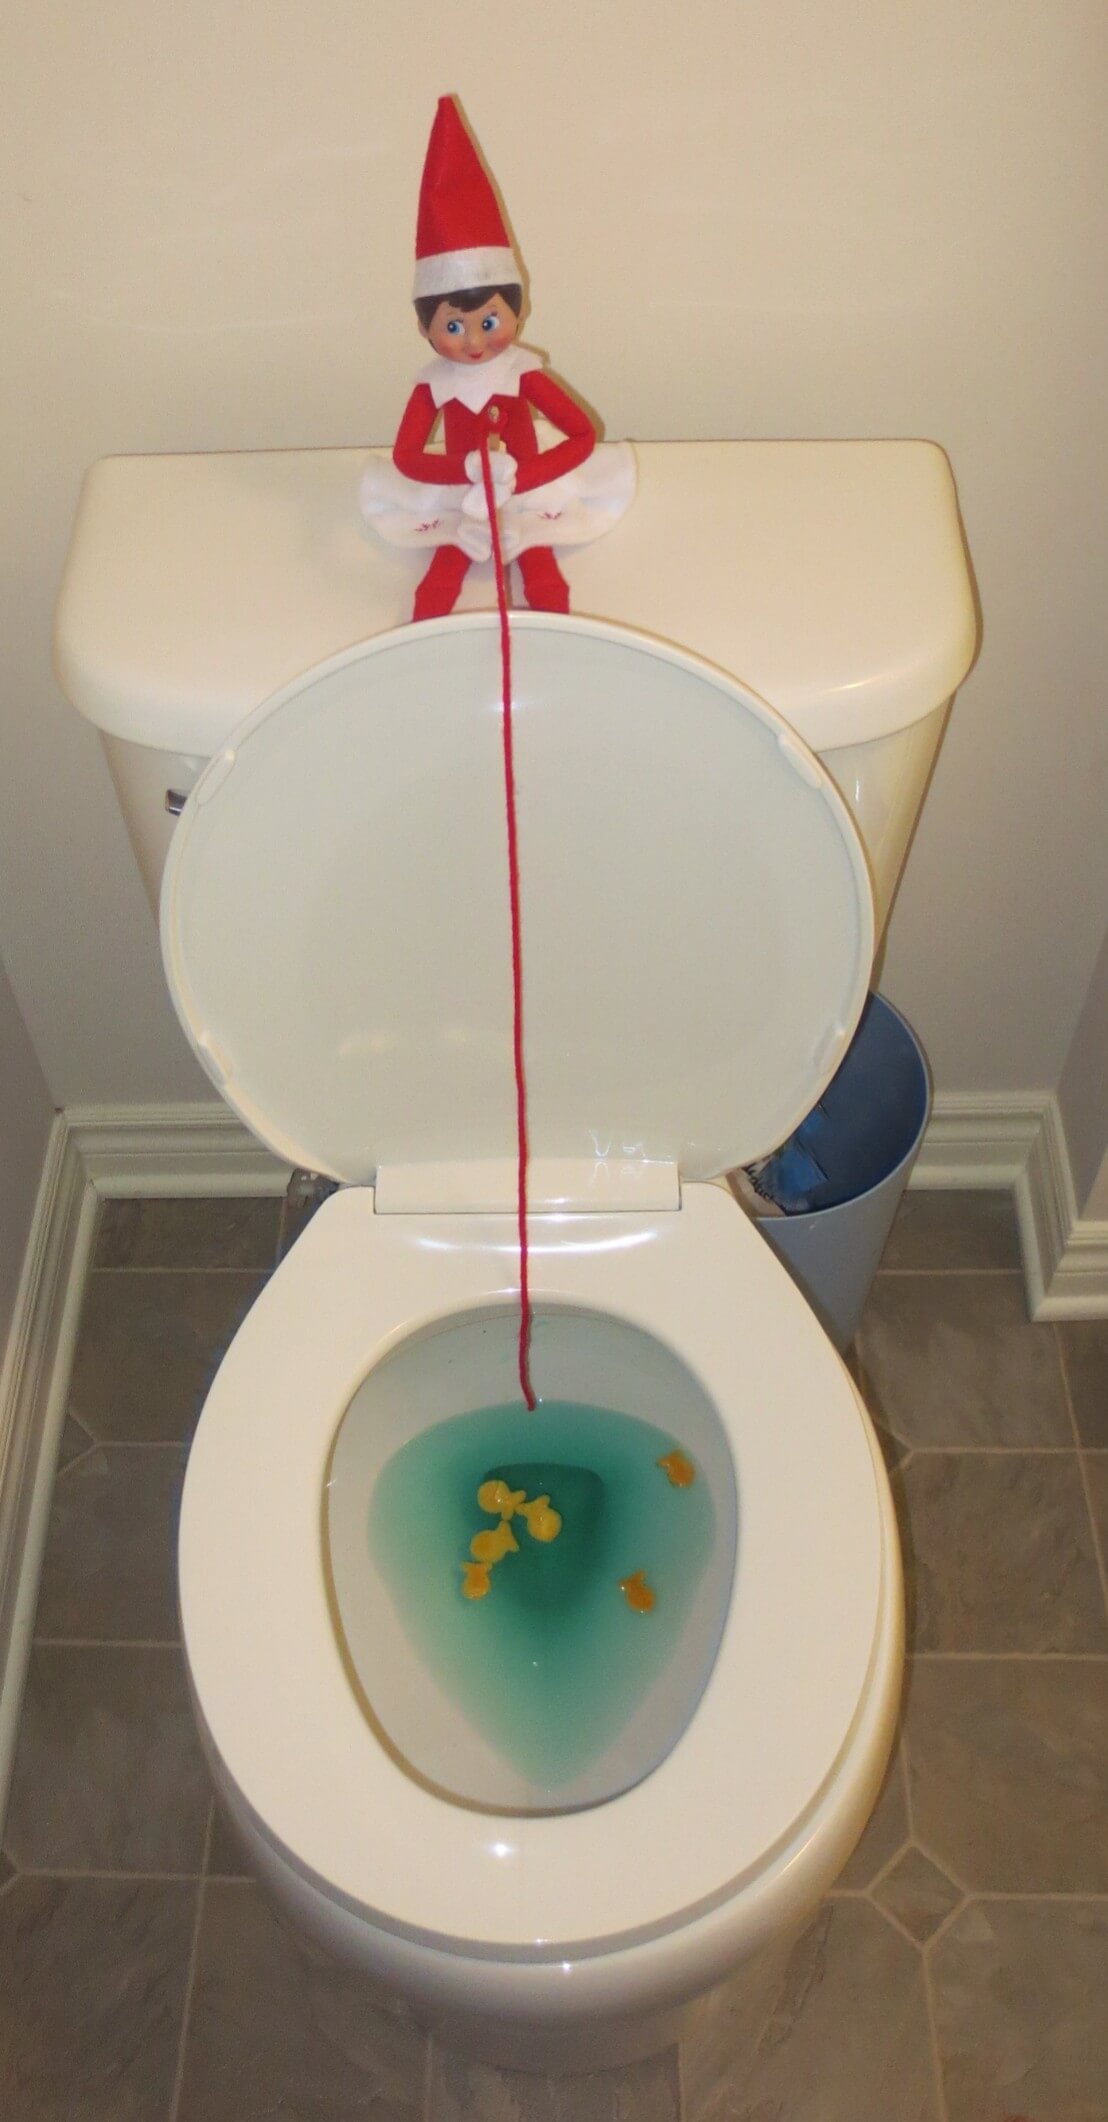 Elf fishing in toilet for Goldfish crackers